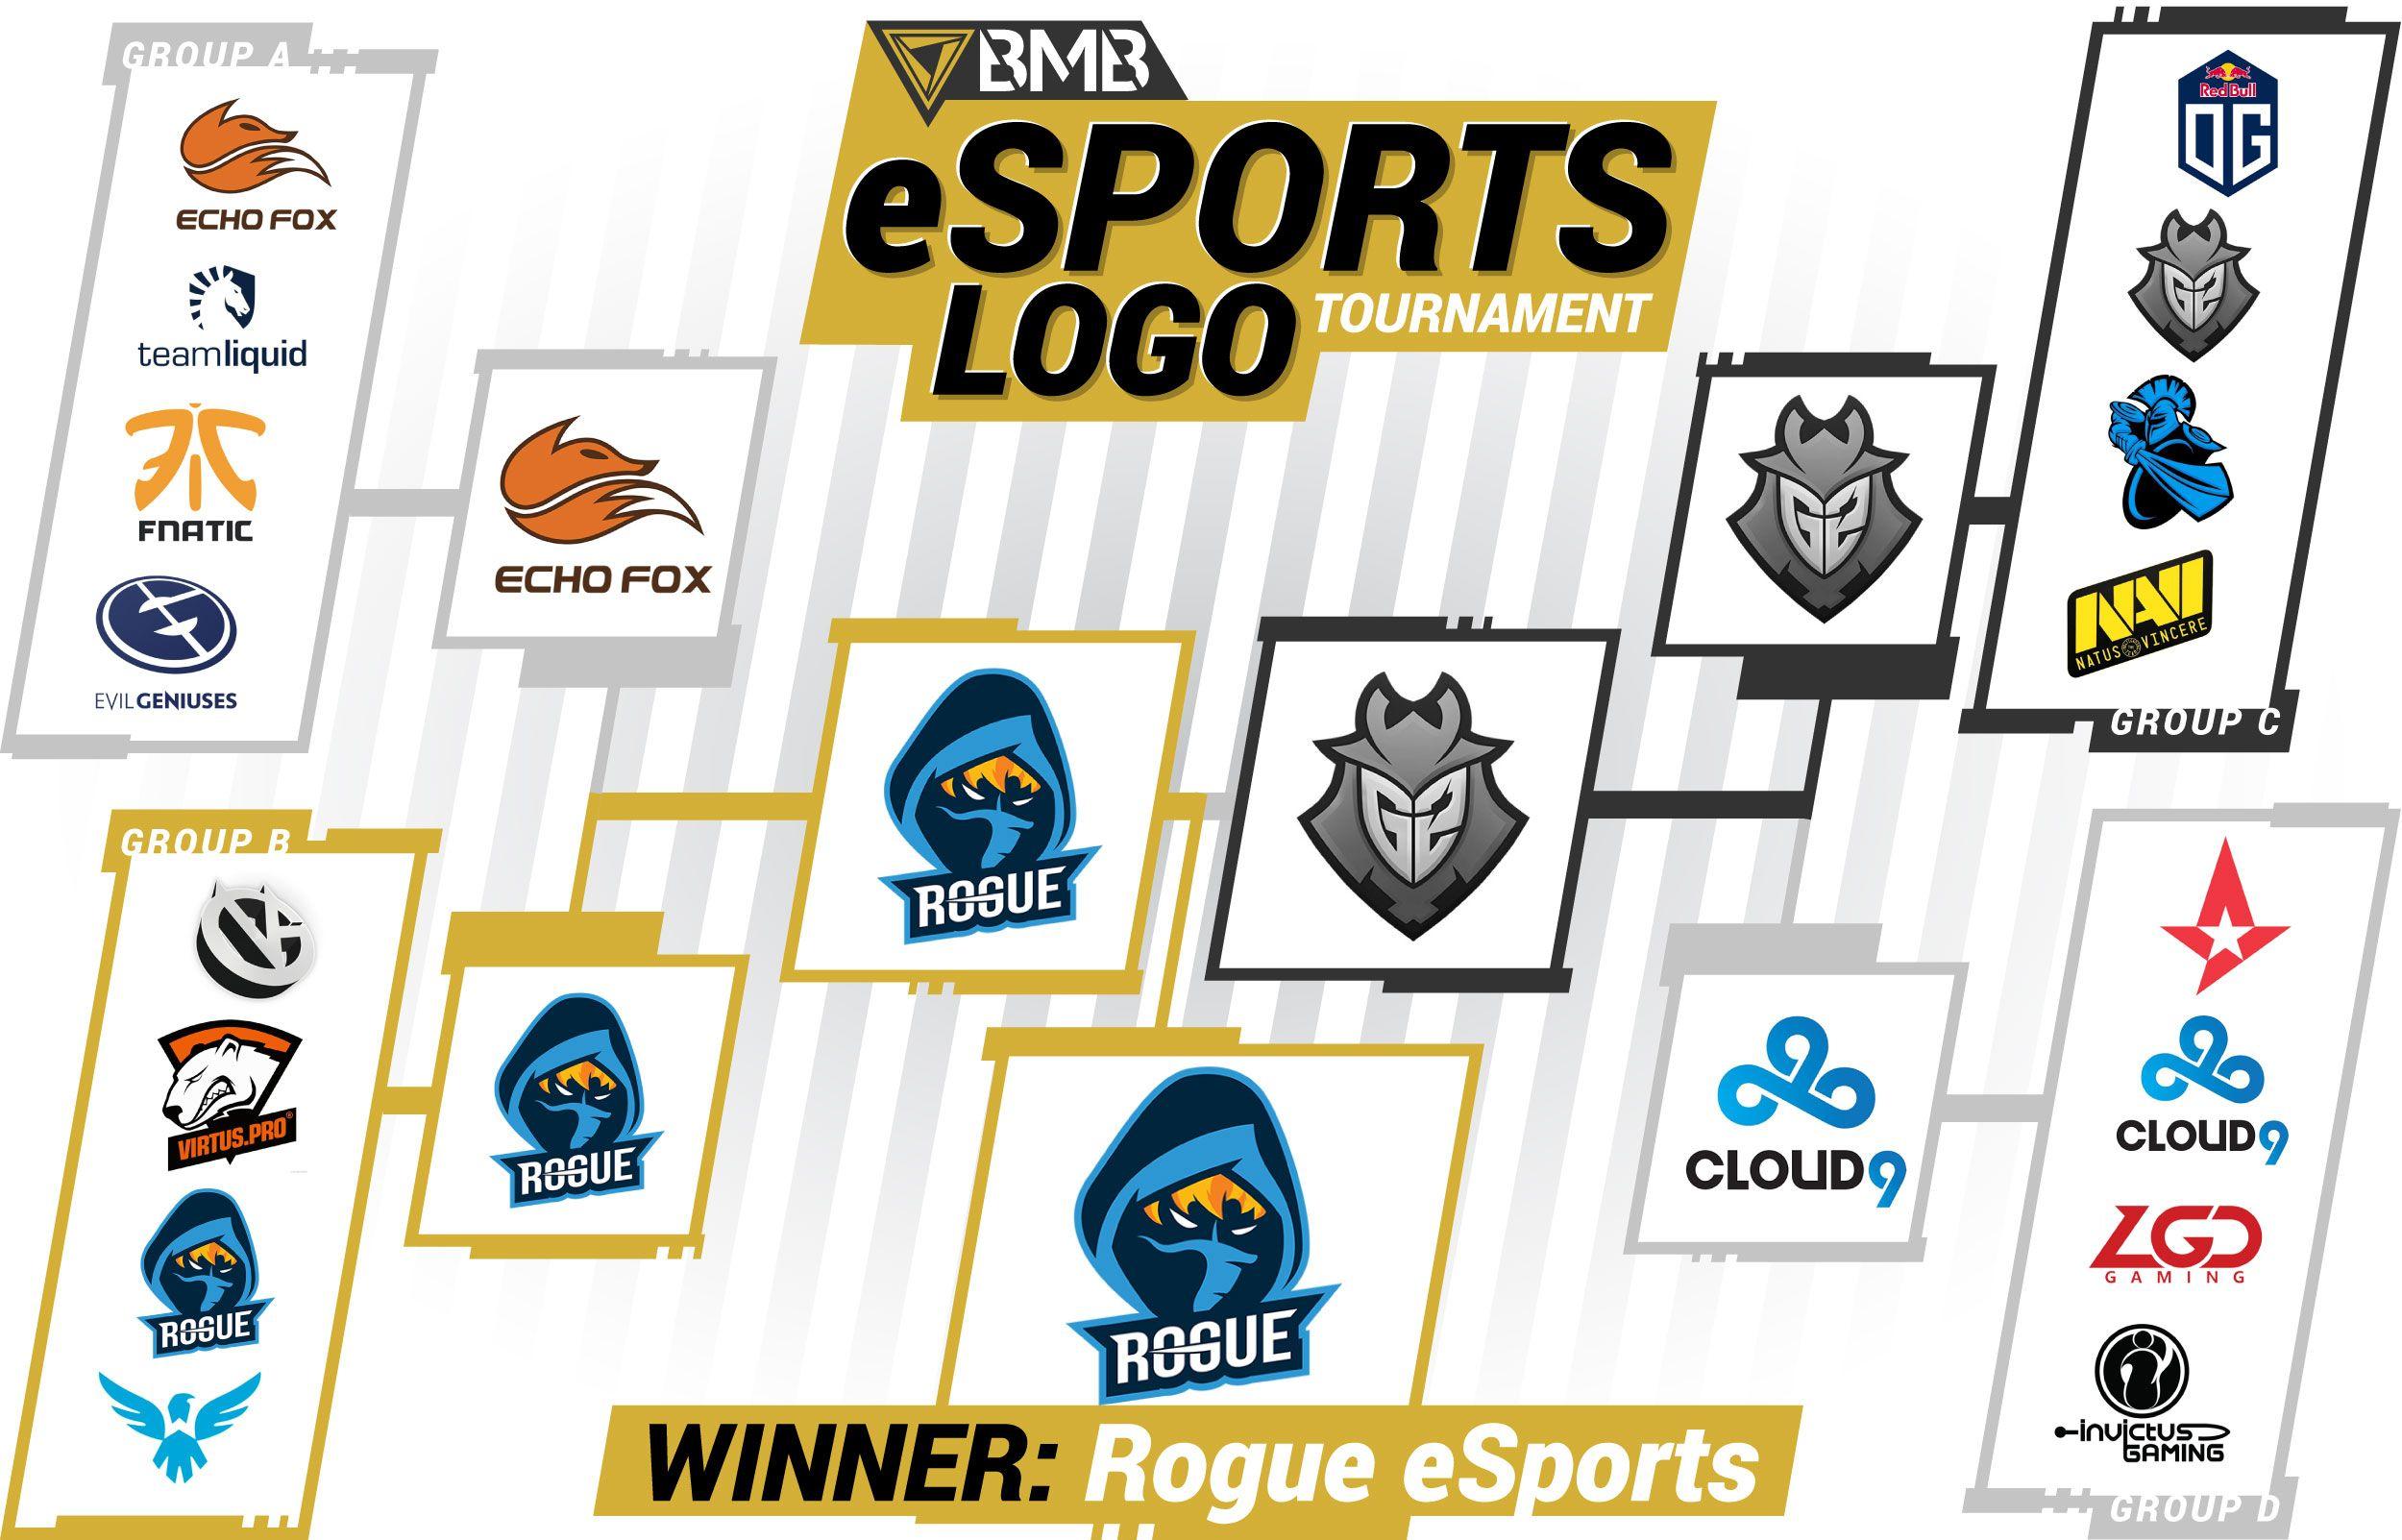 The Mental Gamer Logo - eSports Logo Tournament - BMB